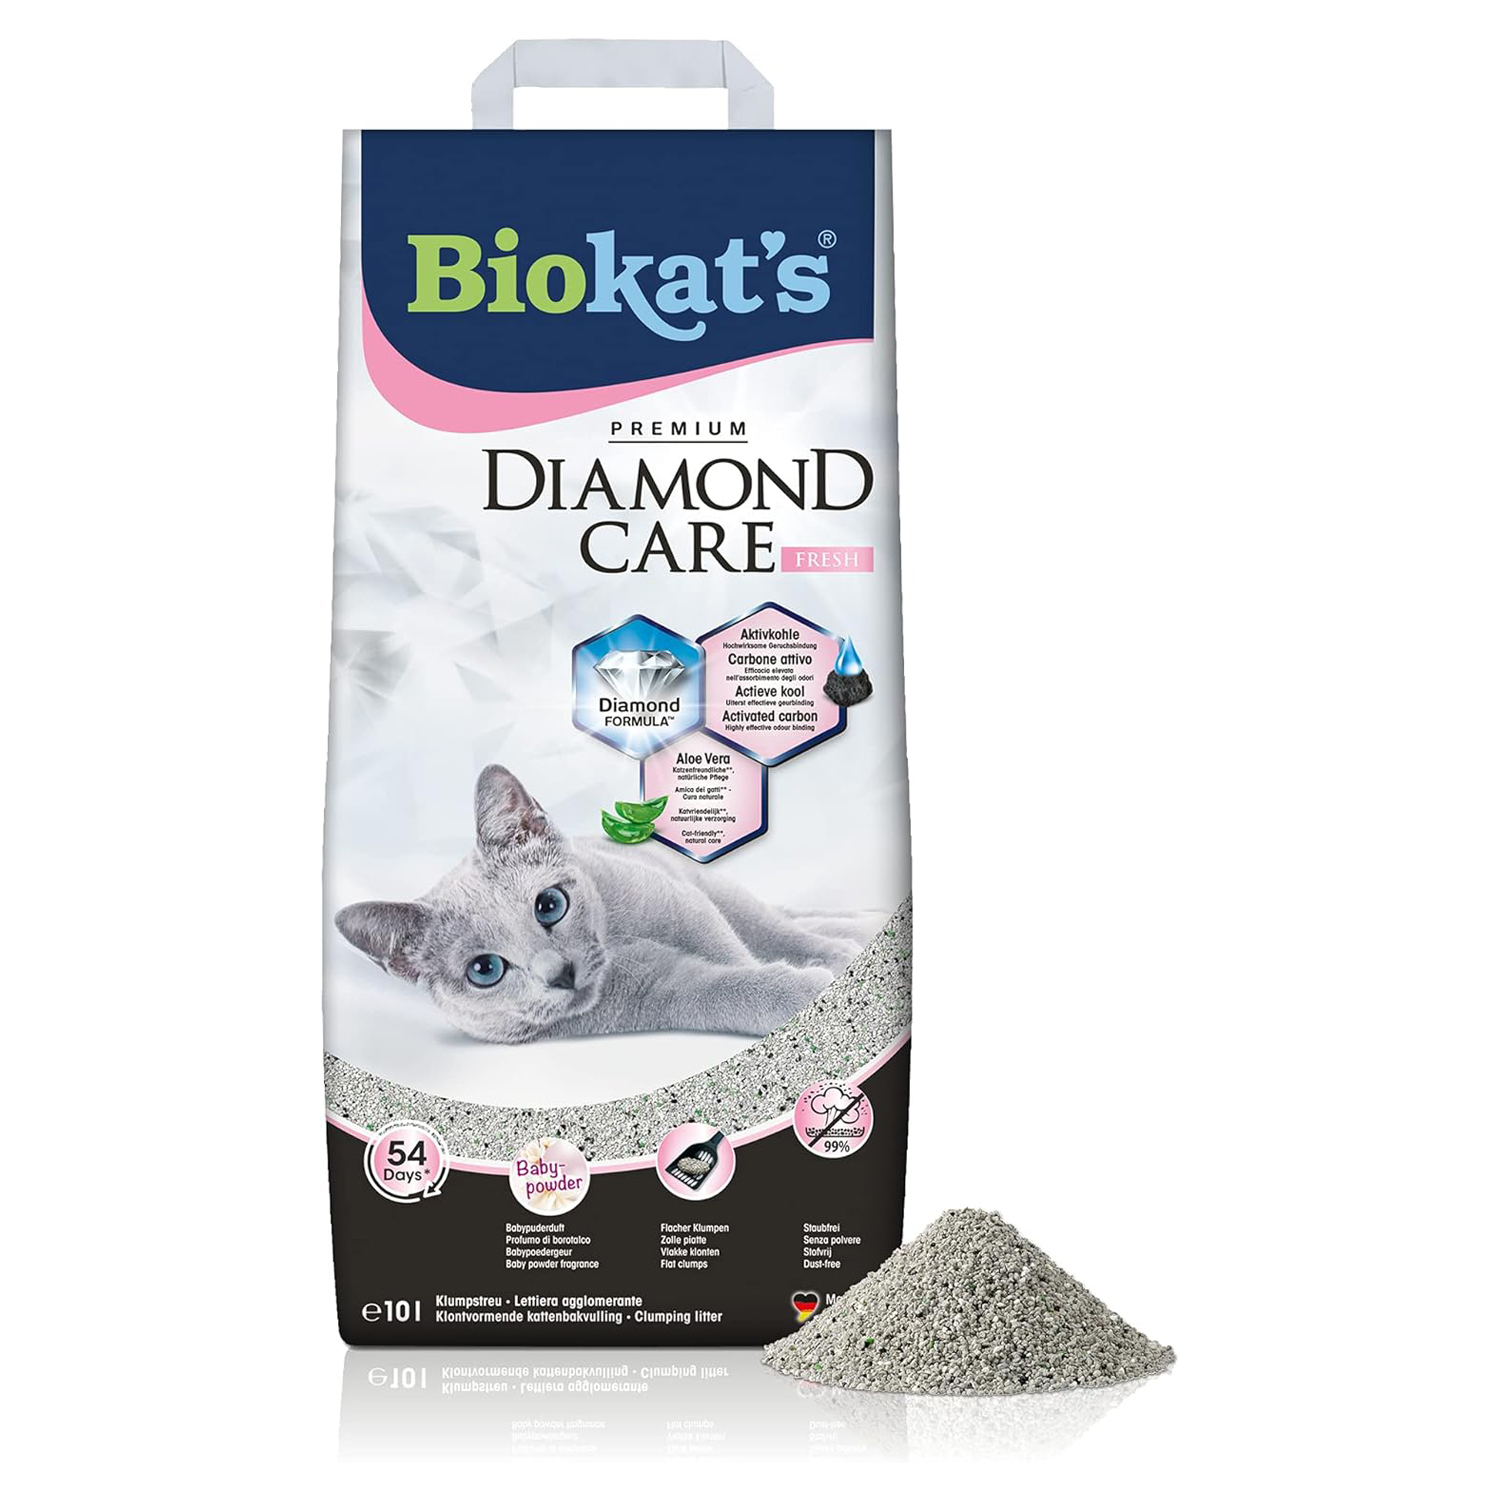 Biokatʼs Diamond Care Fresh with Baby Powder Scent